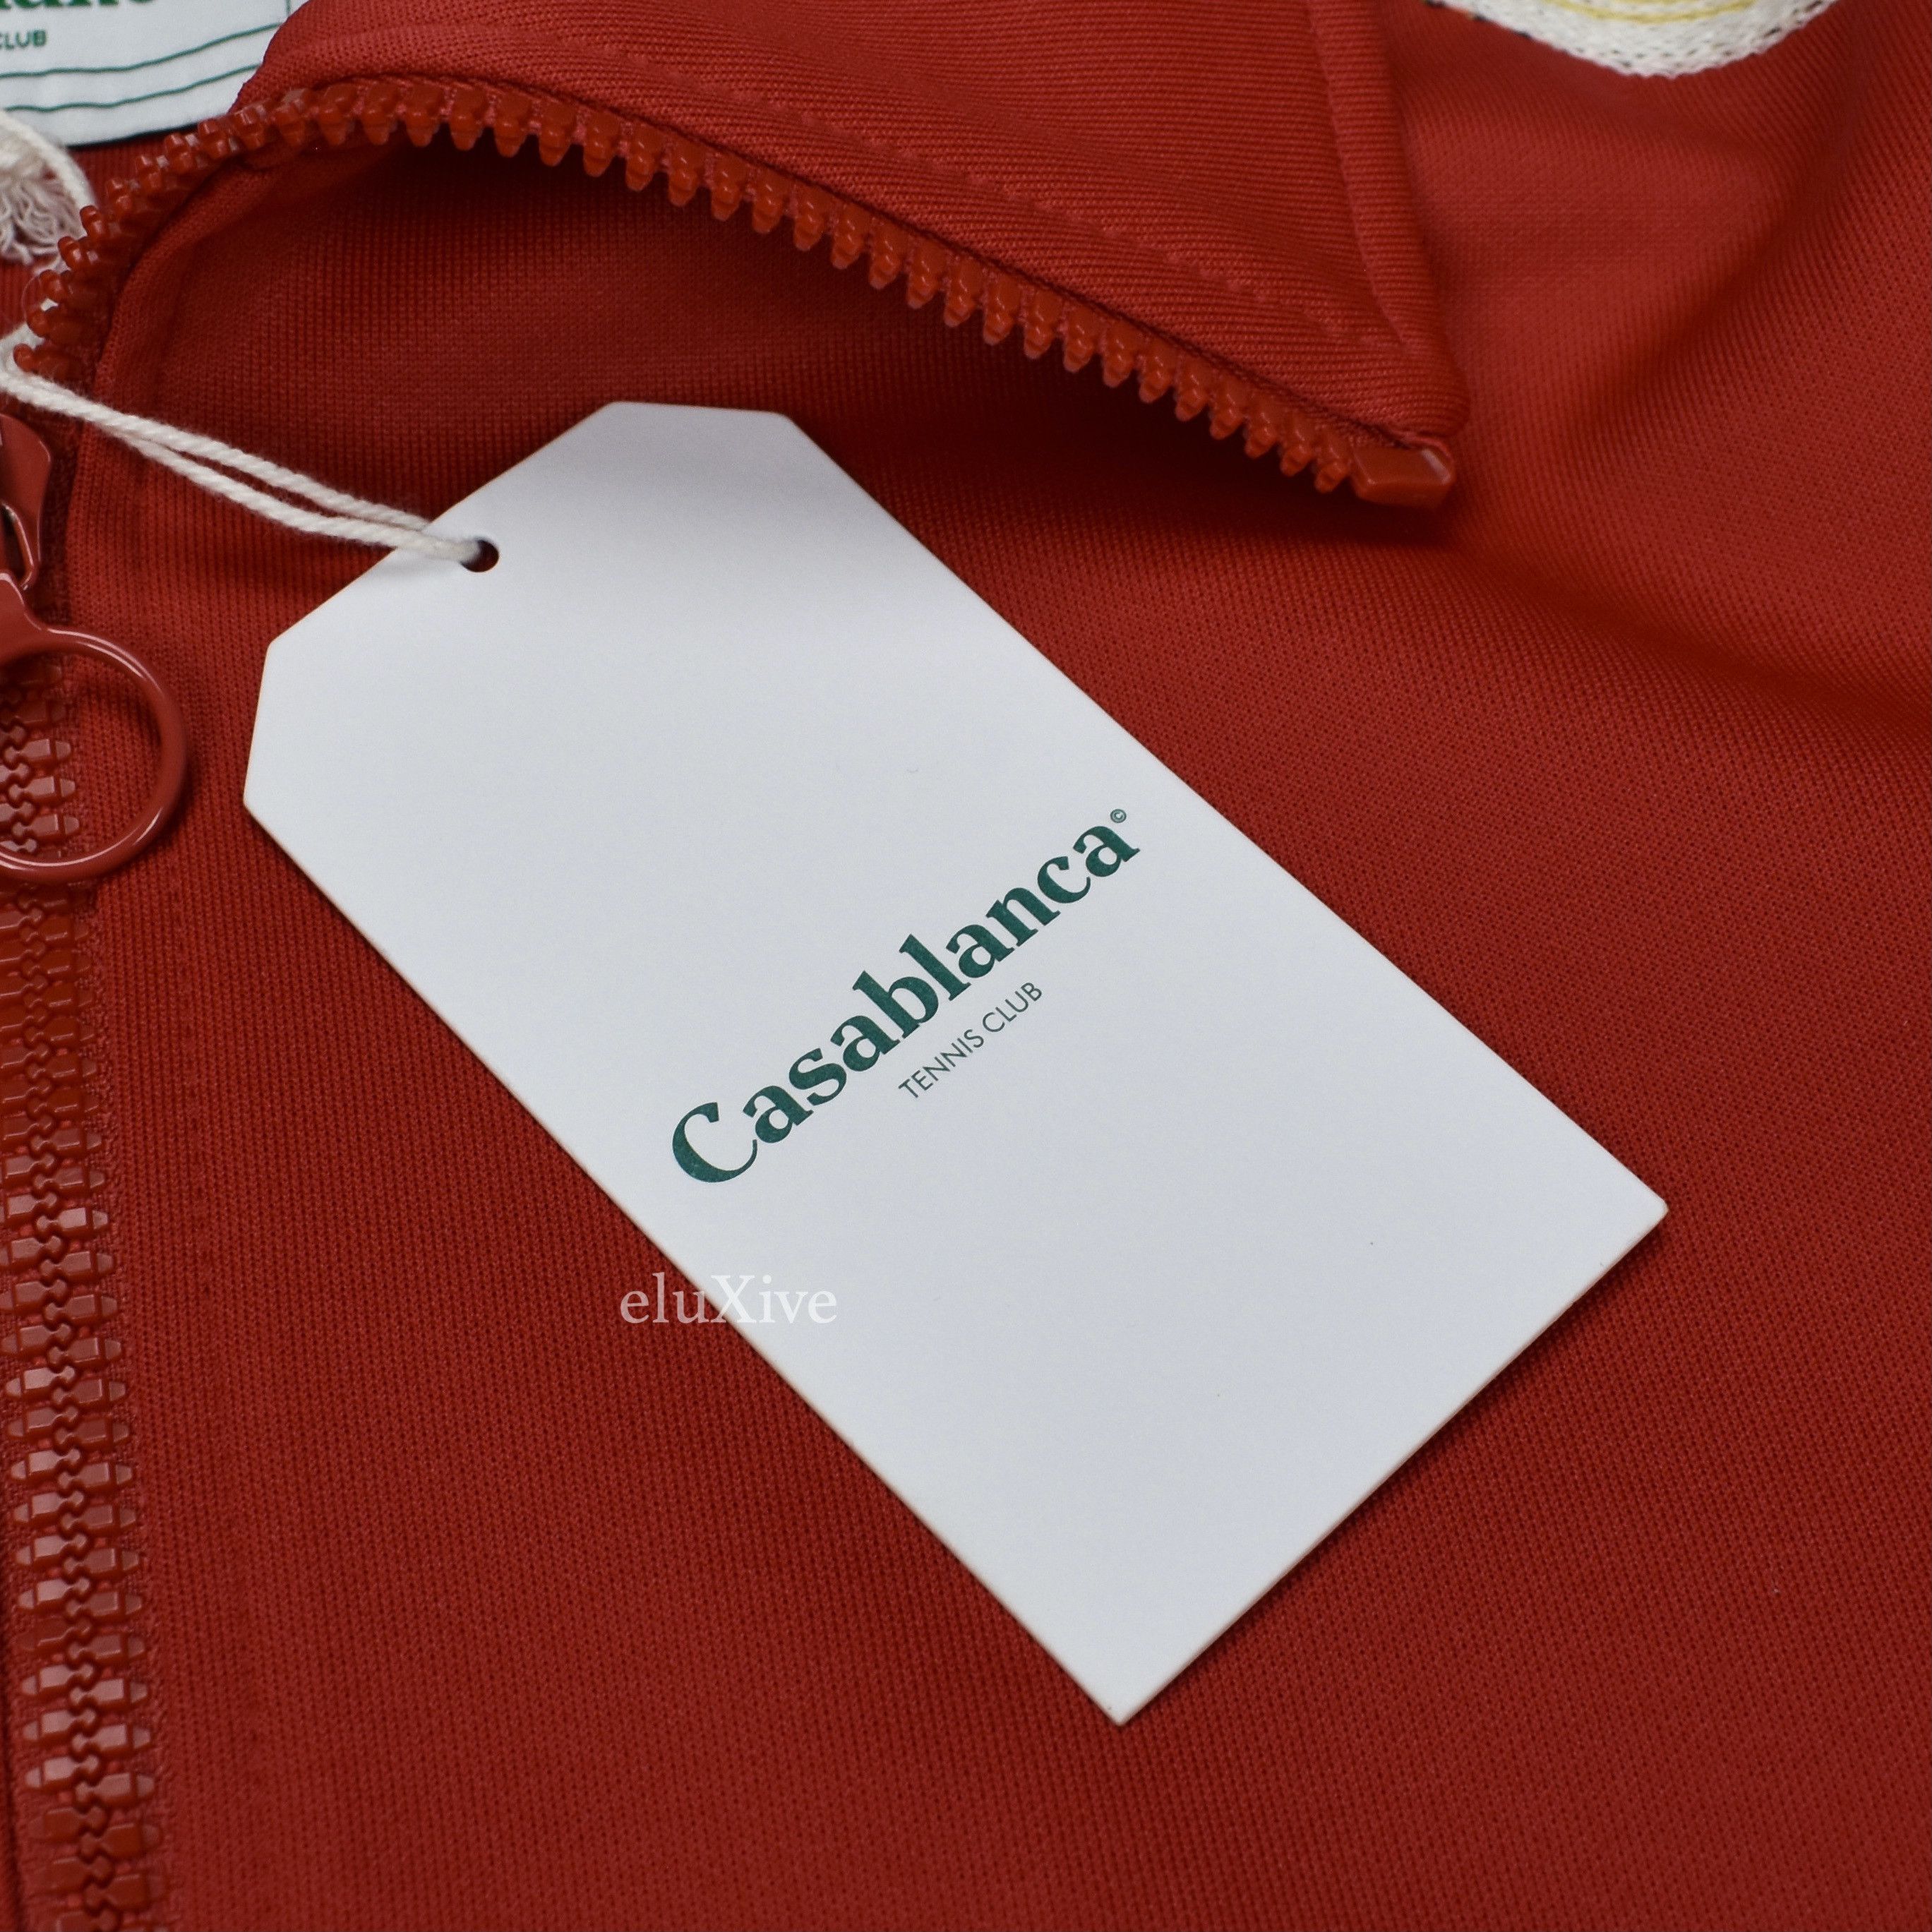 Casablanca Casablanca Red Laurel Stripe Track Jacket NWT Size US M / EU 48-50 / 2 - 6 Thumbnail